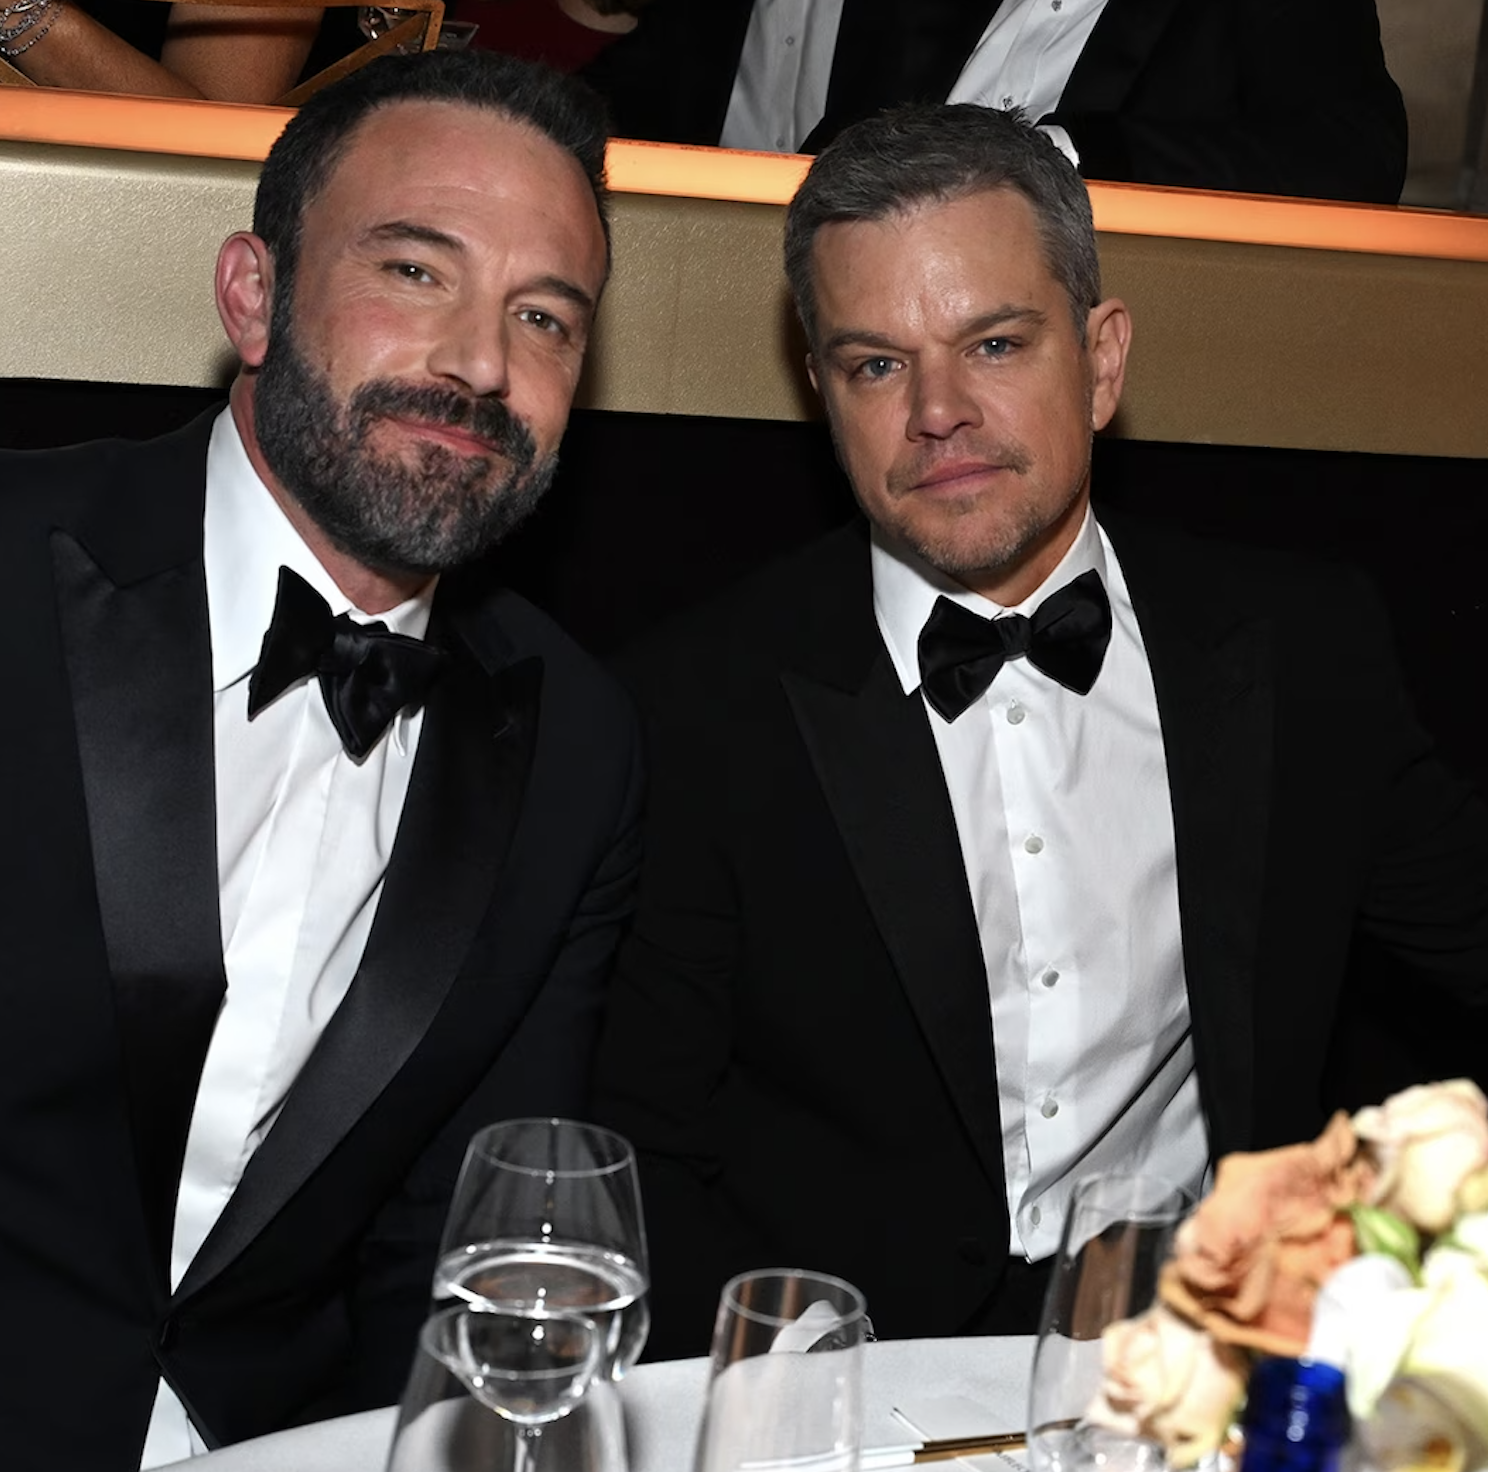 Matt Damon beams after Ben Affleck surprises him at the Golden Globes